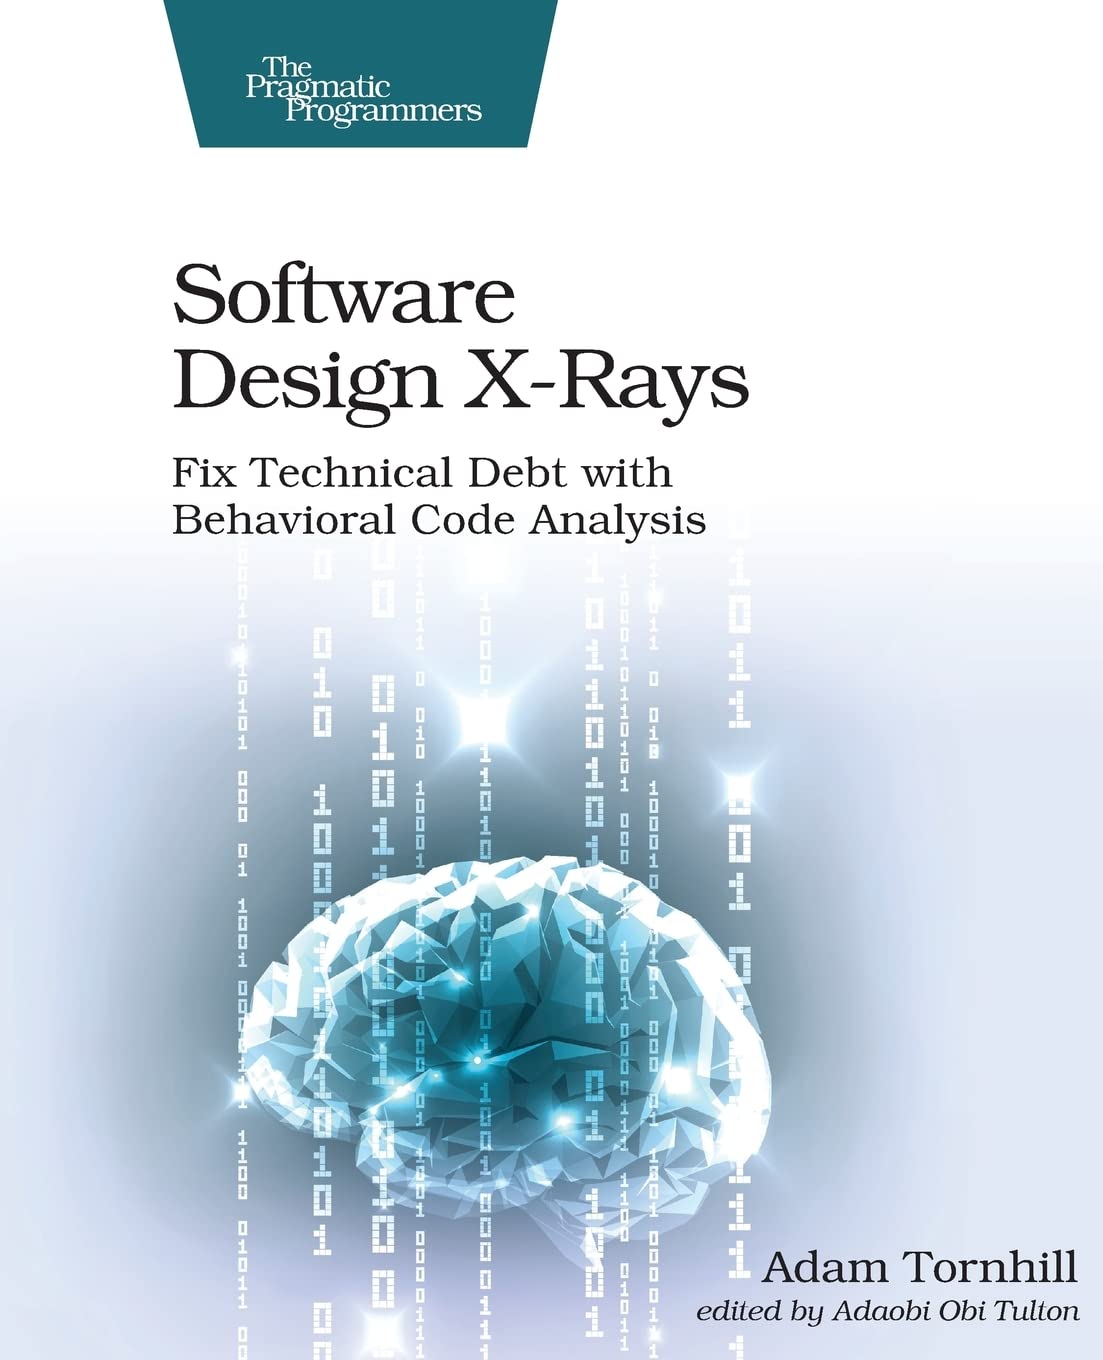 Adam Tornhill: Software Design X-Rays: Fix Technical Debt with Behavioral Code Analysis (2018, Pragmatic Bookshelf)